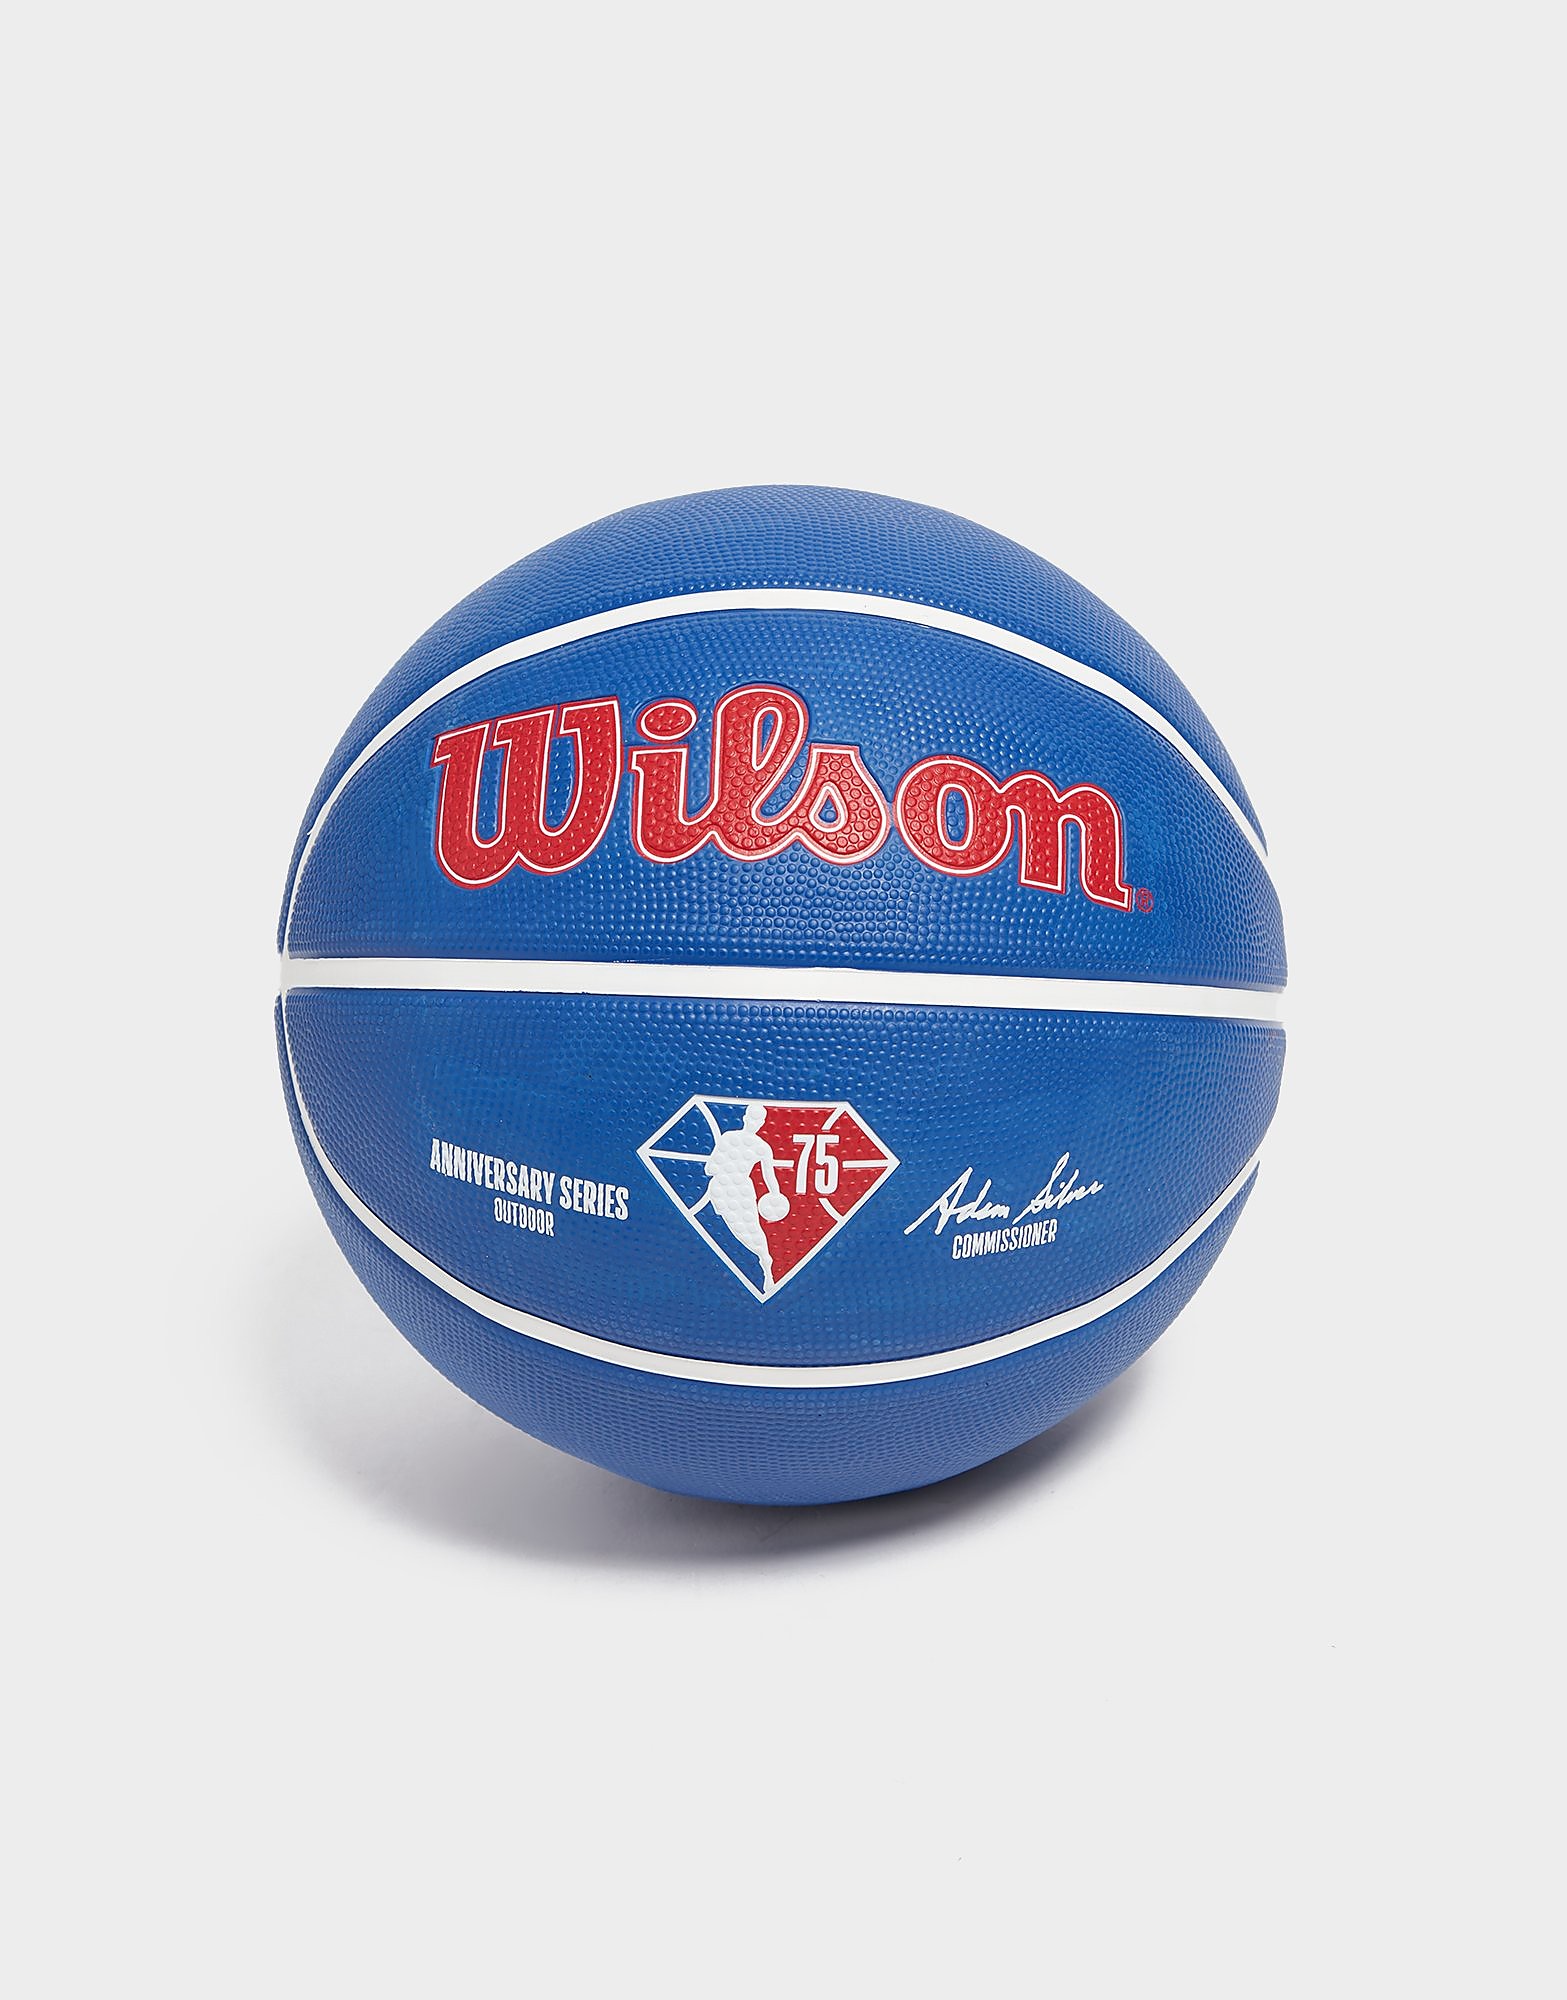 Wilson NBA 75th Anniversary Series Basketball, Blå